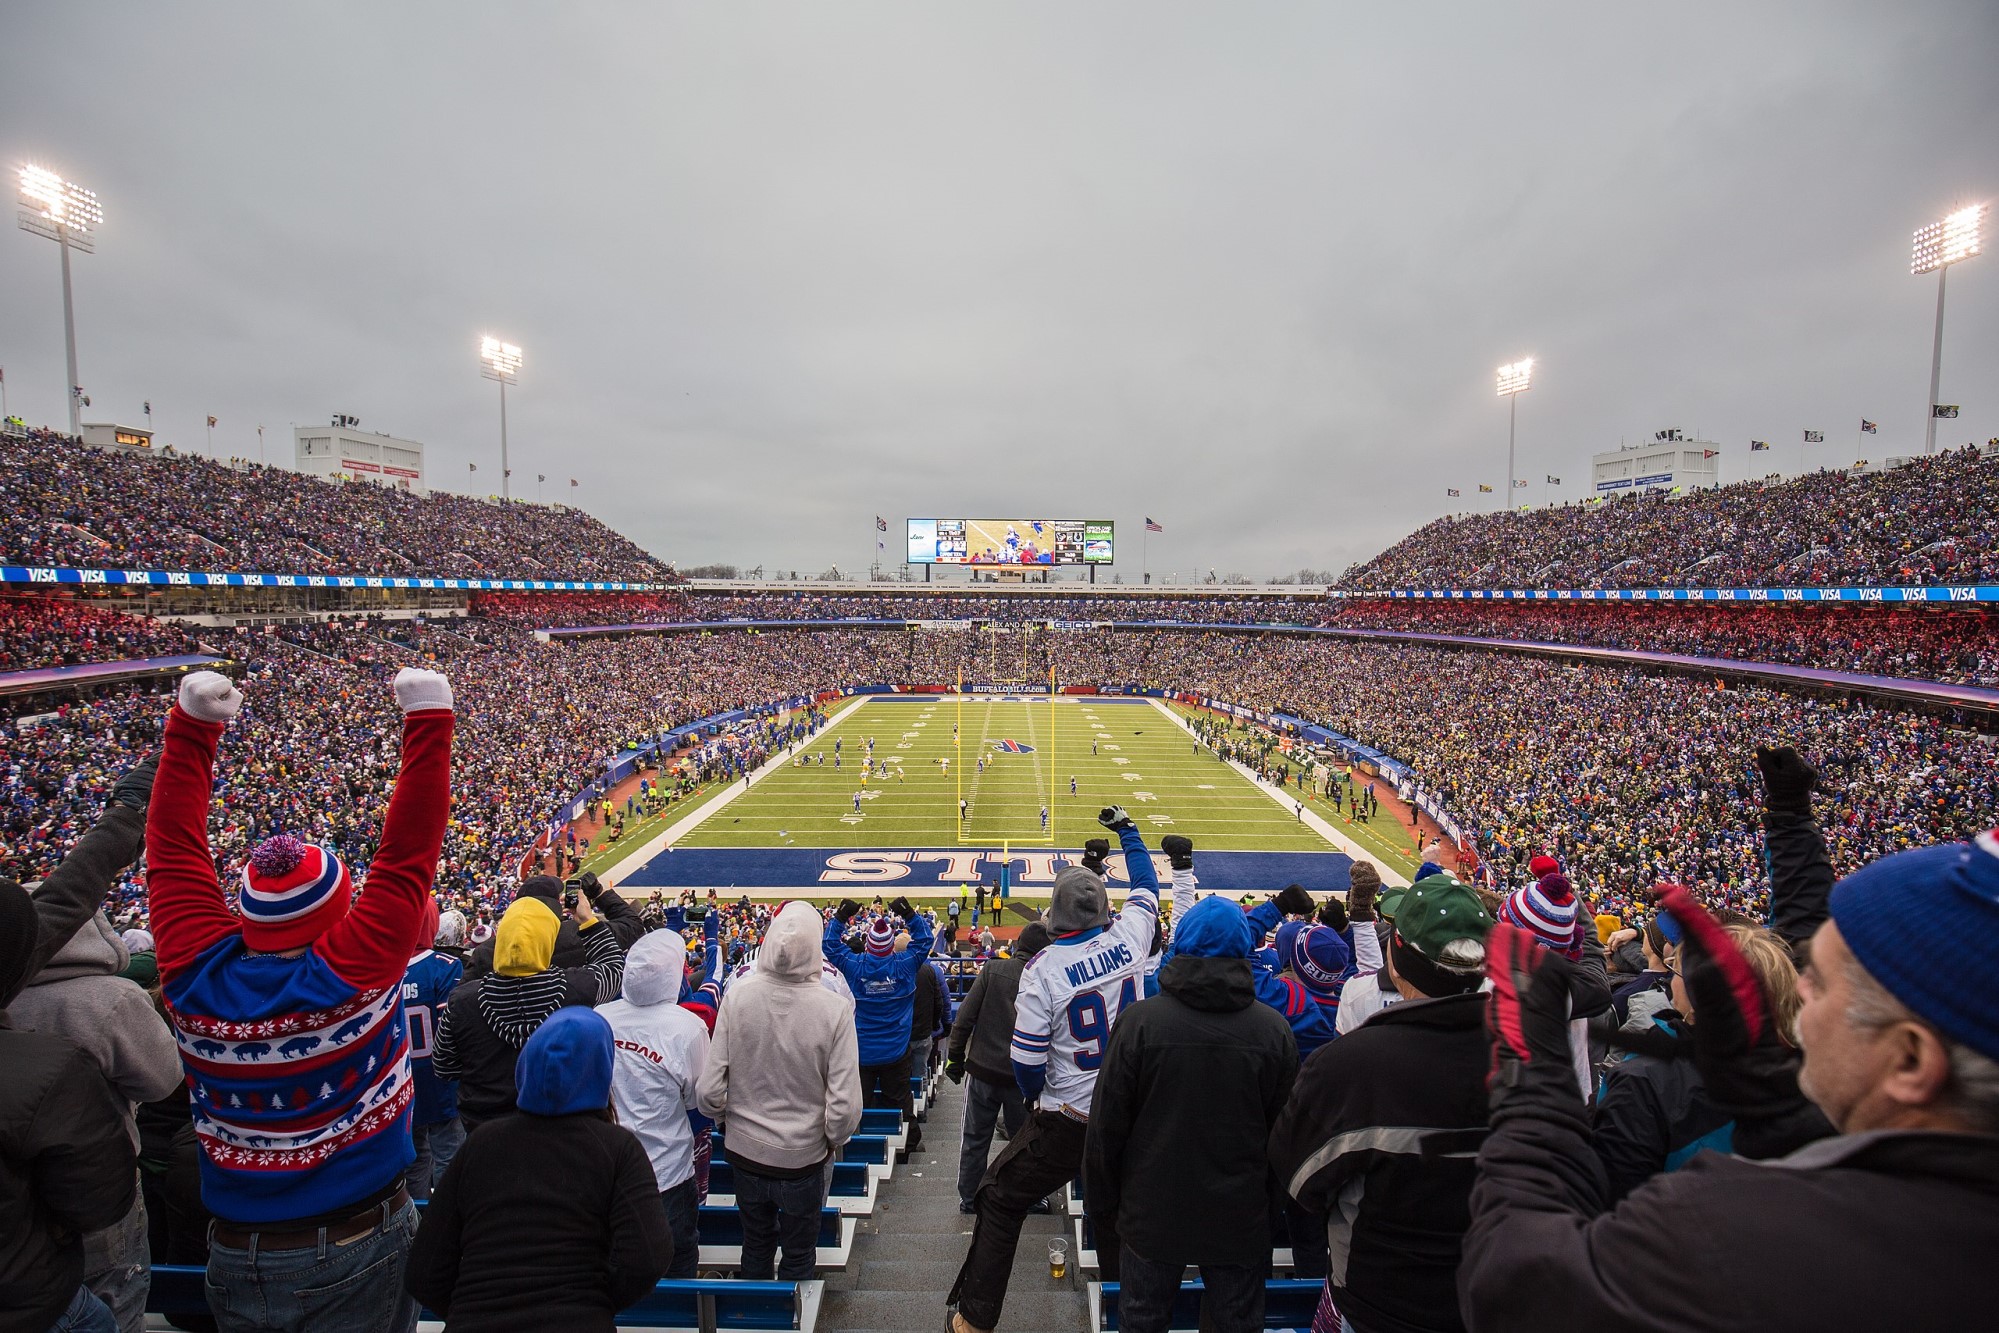 photograph of celebrating crowd during gameday at Bills stadium